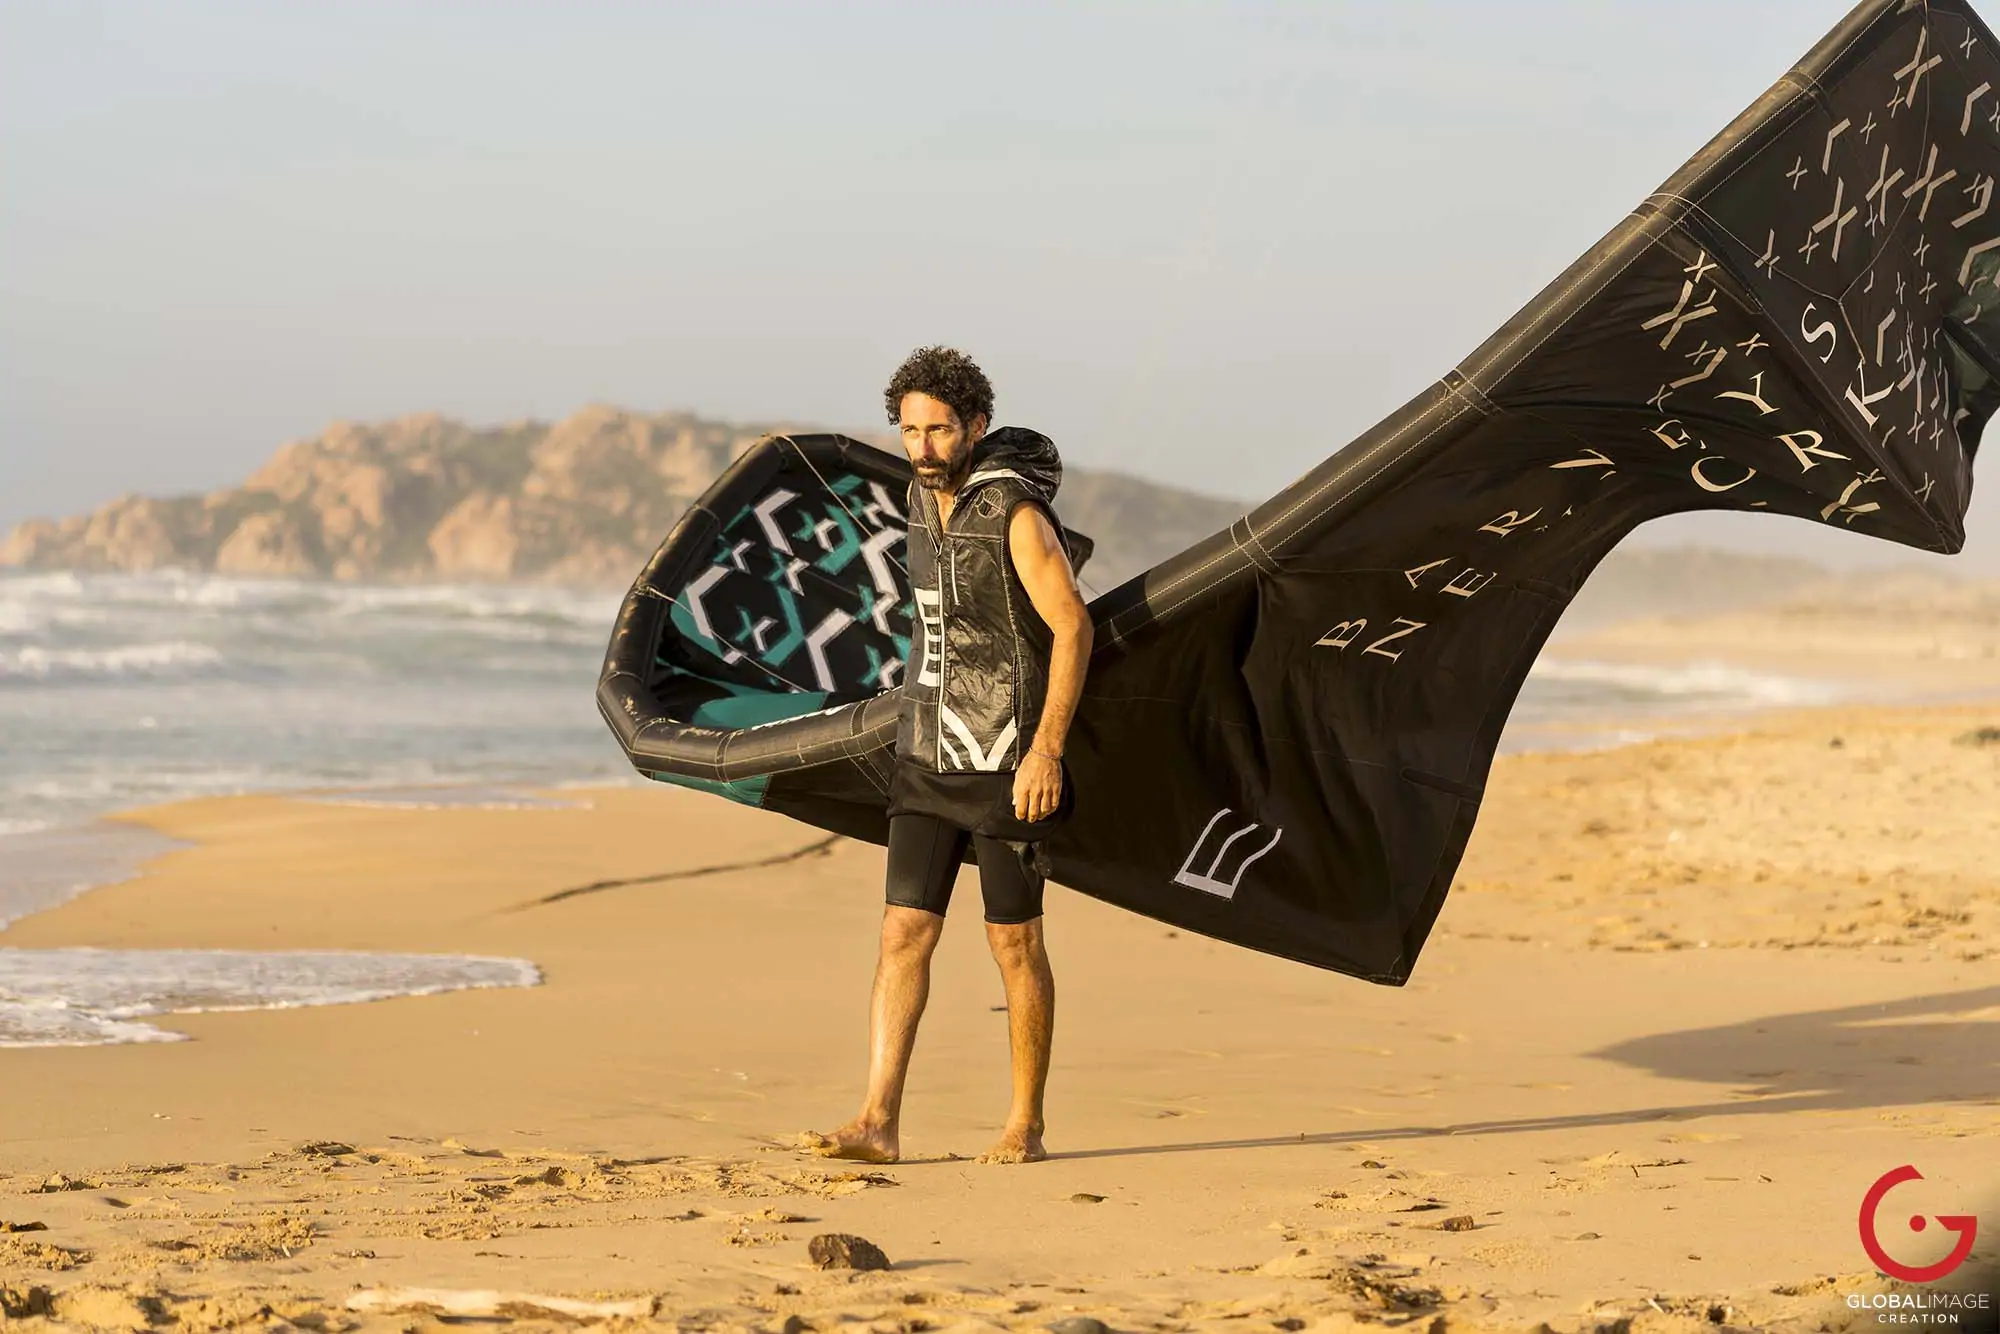 Kitesurfer Renzo Mancini Walks on the Beach With His Kite